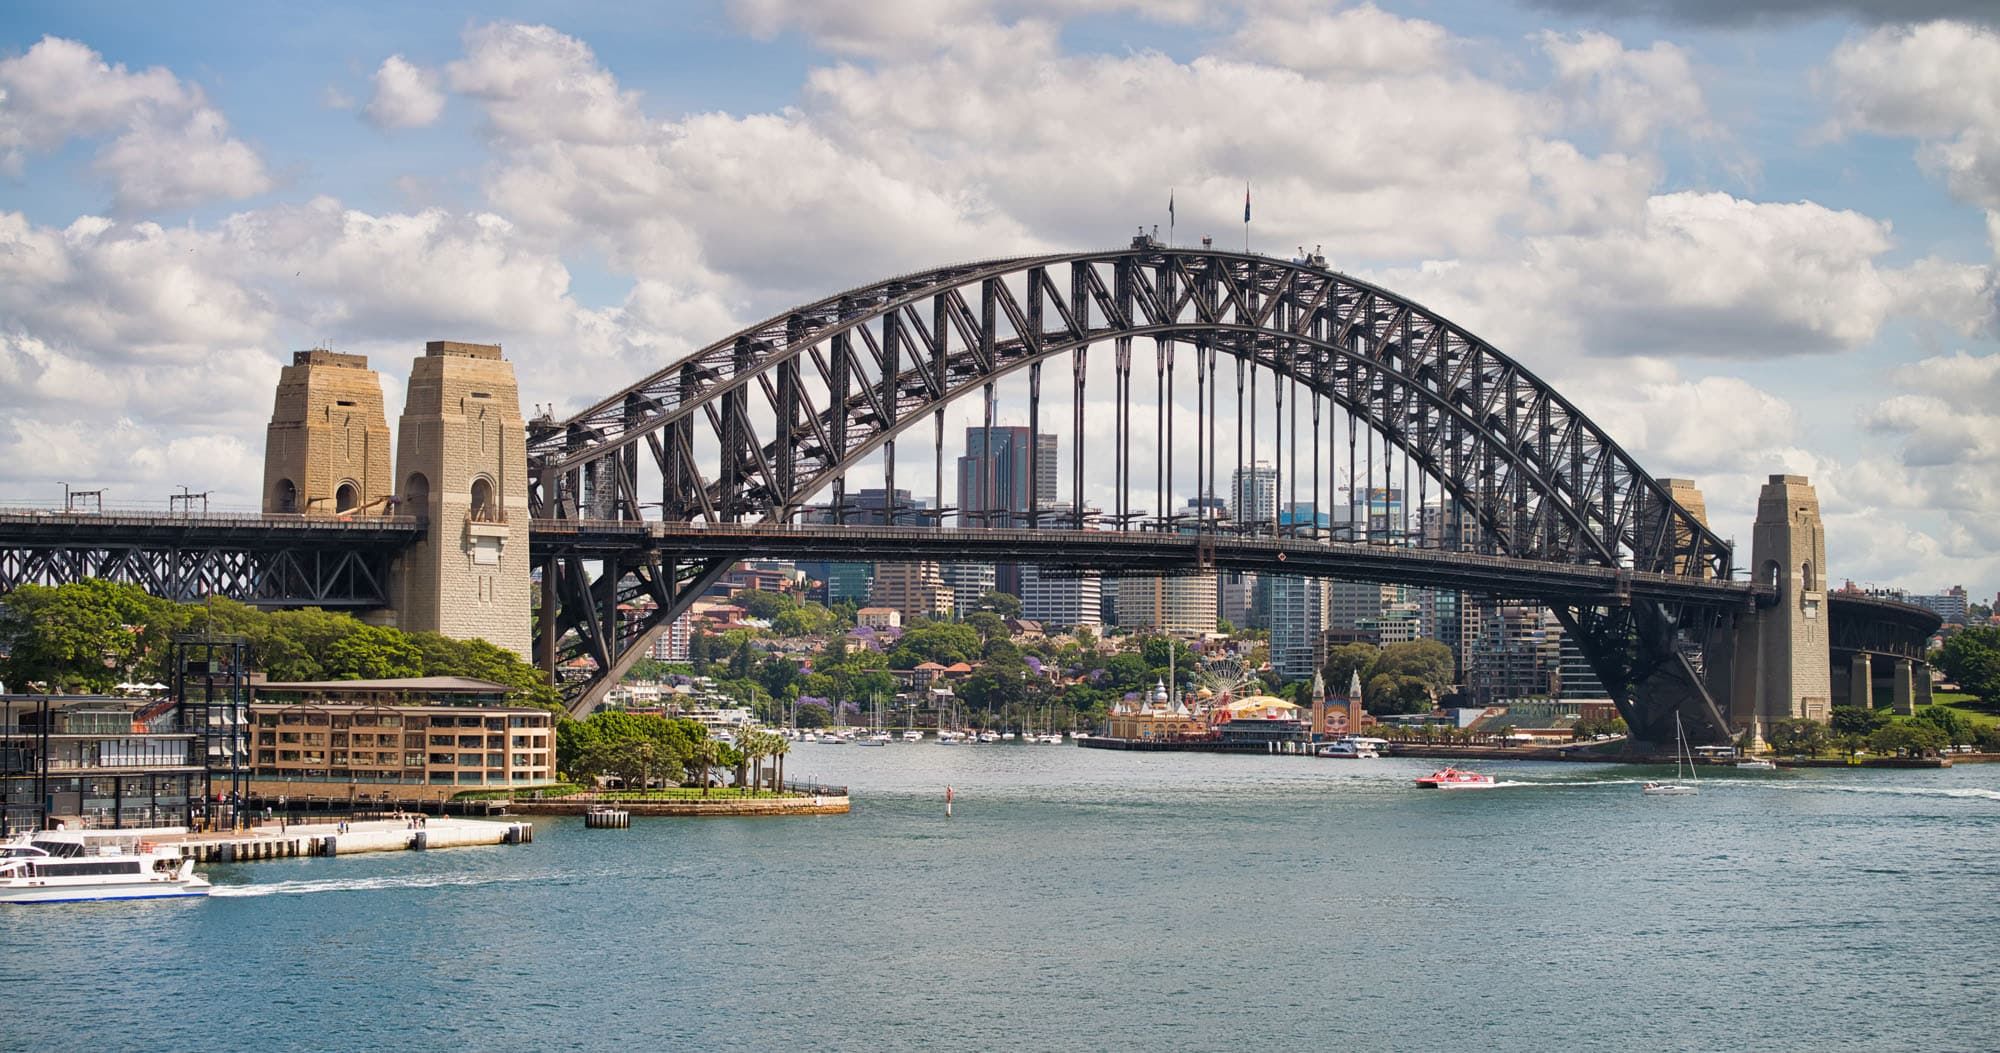 Featured image for “Sydney Bridge Climb: Photos, Tour Options & Is It Worth It?”